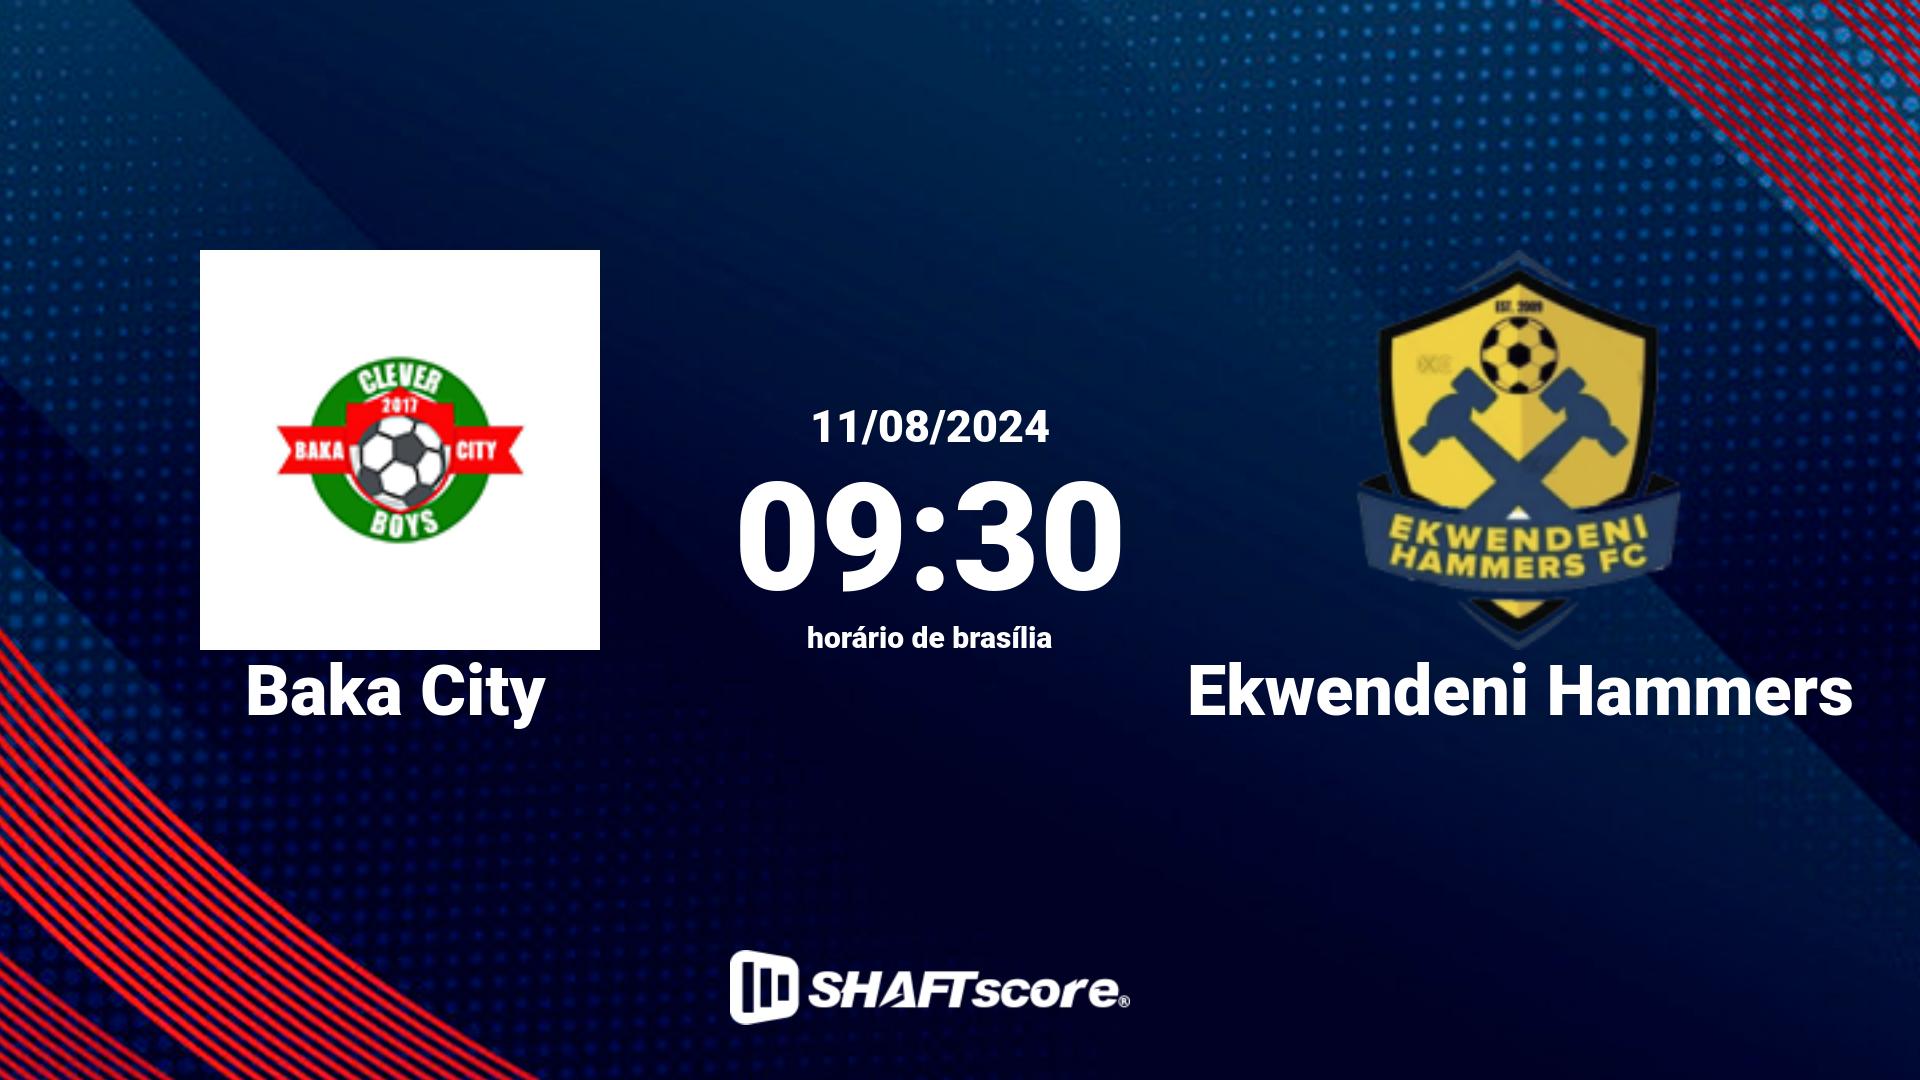 Estatísticas do jogo Baka City vs Ekwendeni Hammers 11.08 09:30